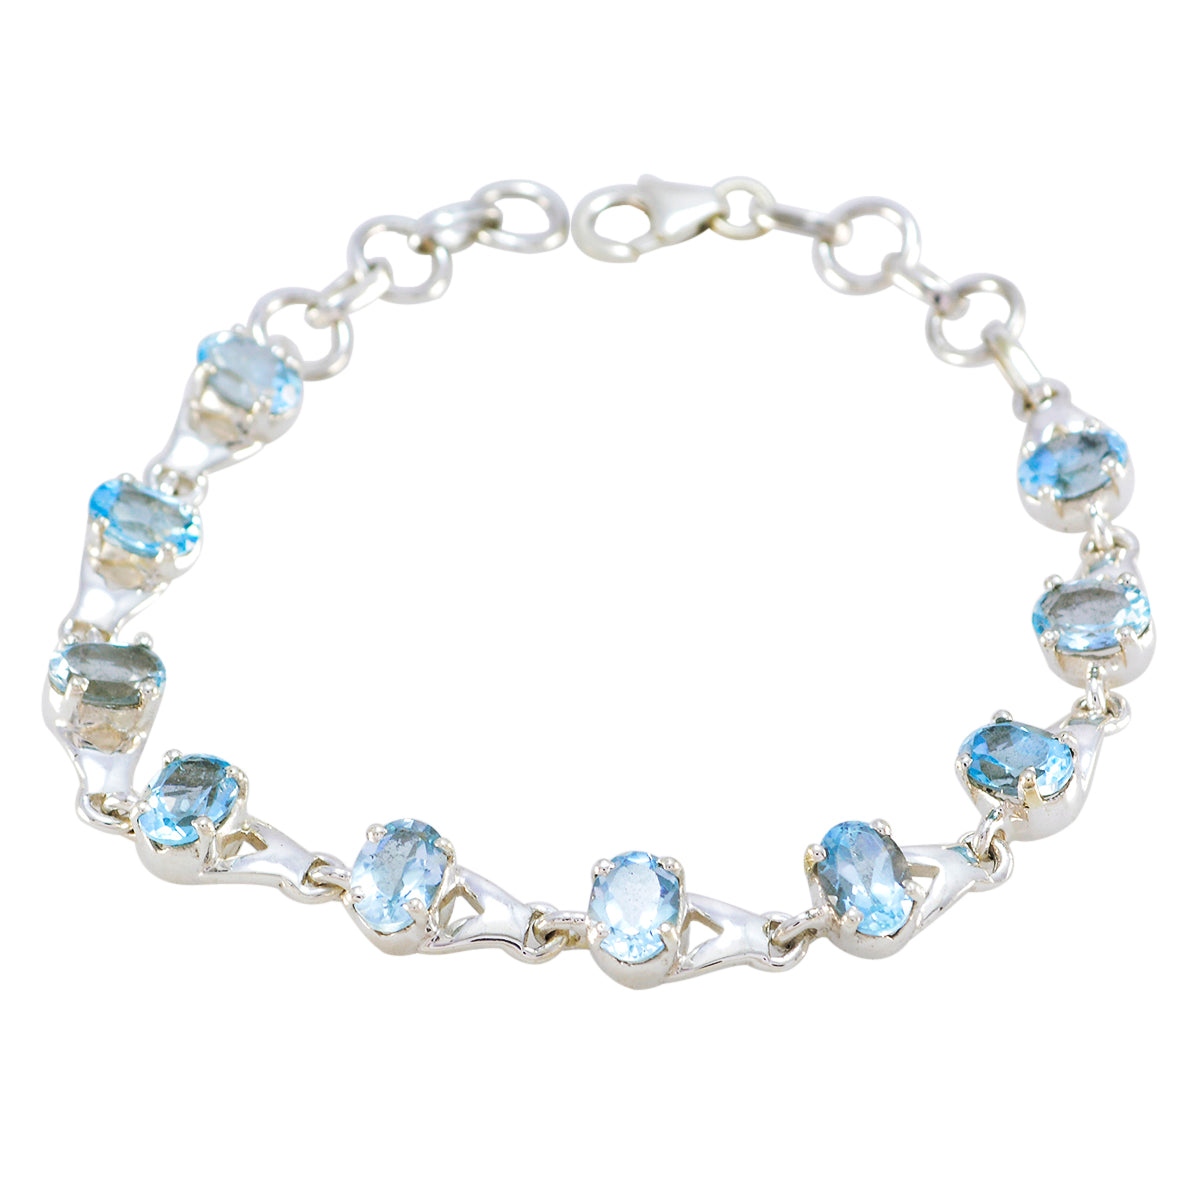 Riyo Good Gemstones Oval Faceted Blue Blue Topaz Silver Bracelet gift for labour day